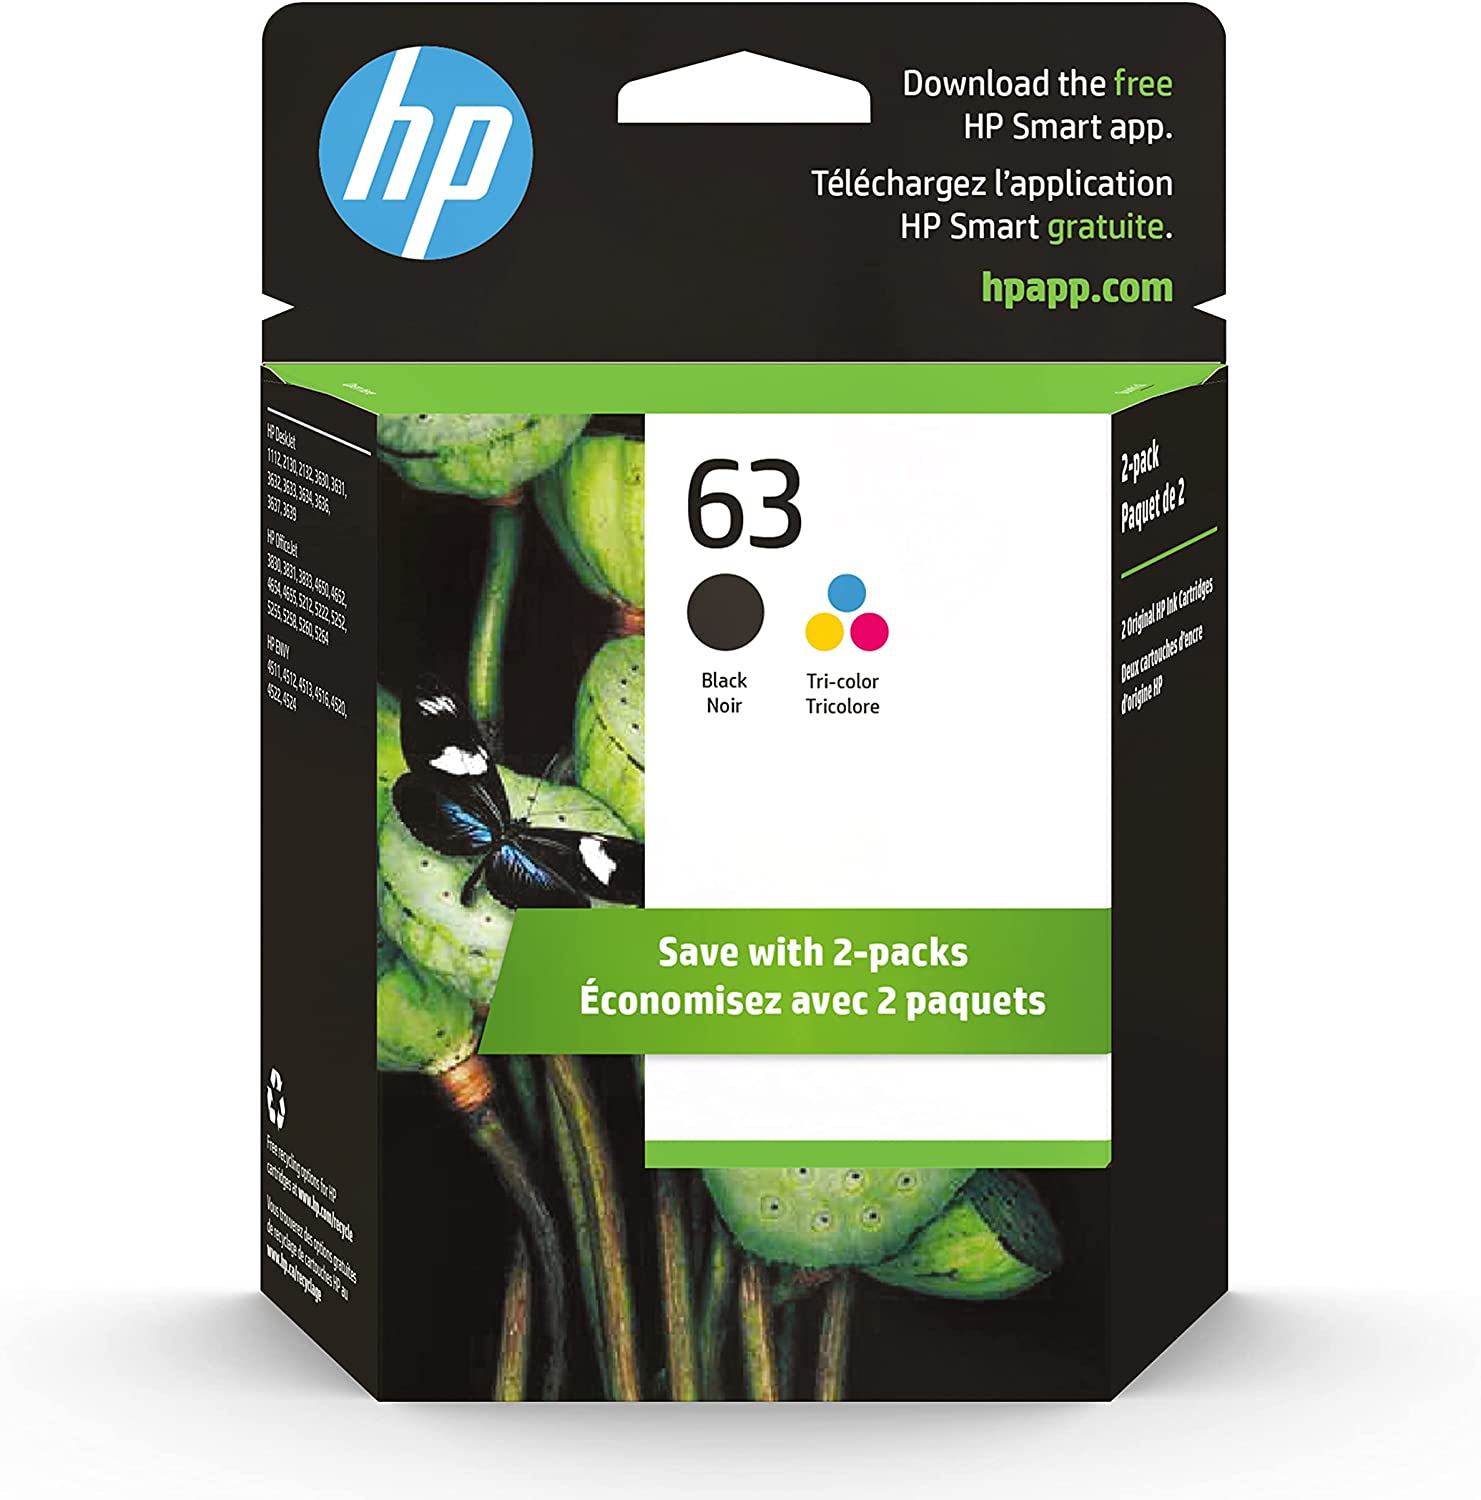 HP 63 Black/Tri-color Ink (2팩) | HP DeskJet 1112, 2130, 3630 시리즈와 작동; HP ENVY 4510, 4520 시리즈; HP OfficeJet 3830, 4650, 5200 시리즈 | 인스턴트 잉크 대상 | L0R46AN